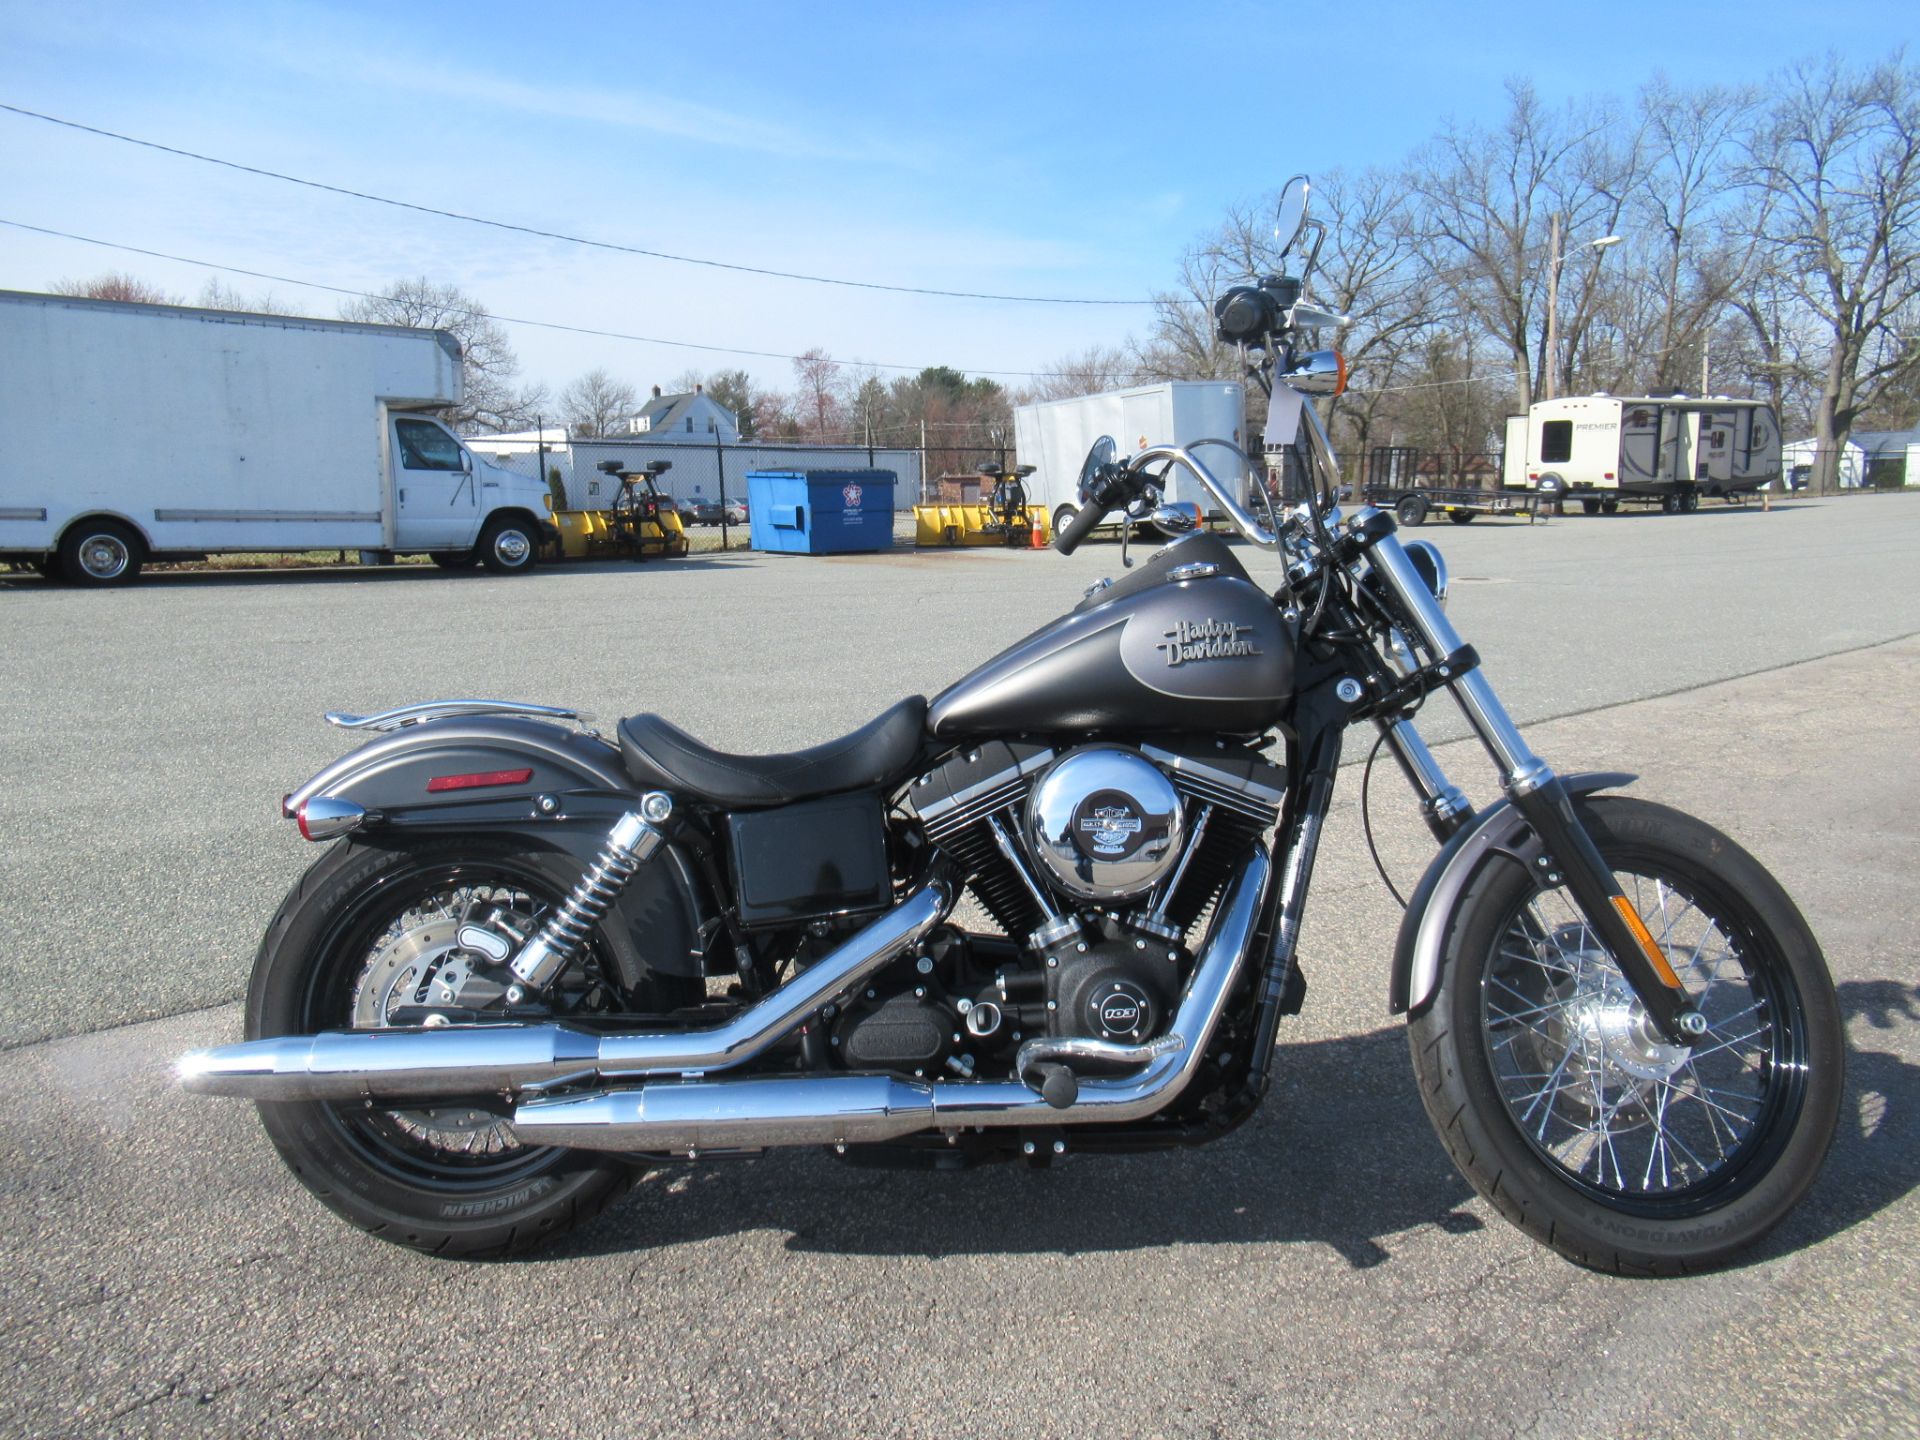 2017 Harley-Davidson Street Bob® in Springfield, Massachusetts - Photo 1